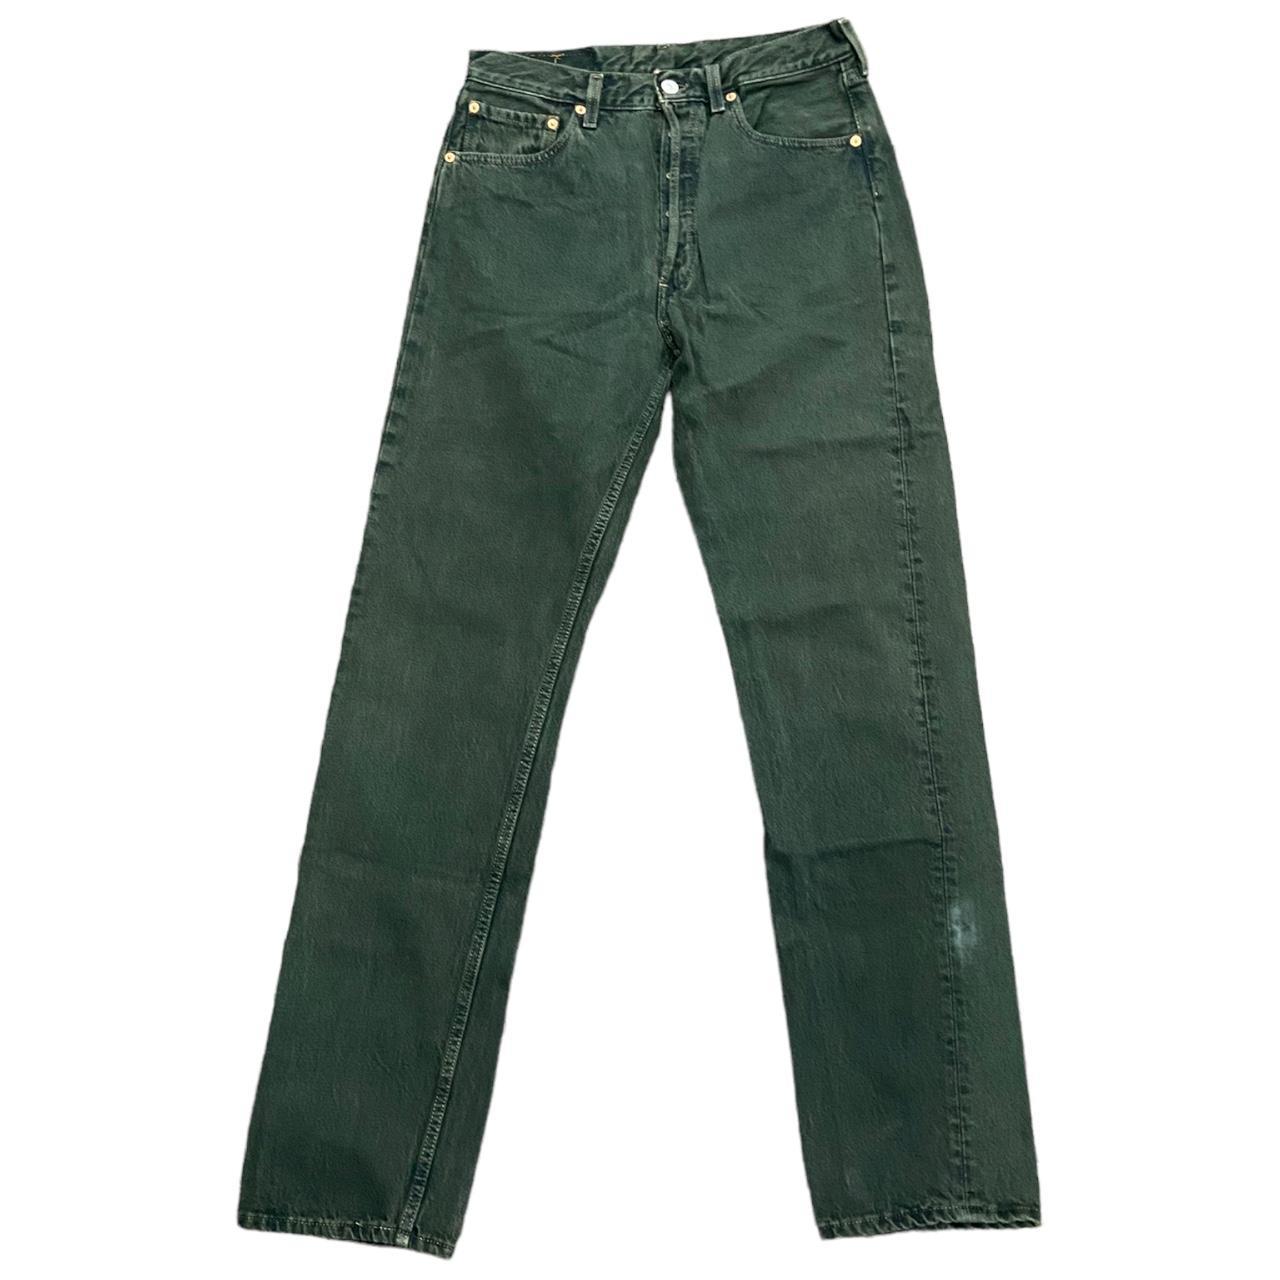 Levi's Men's Green Jeans